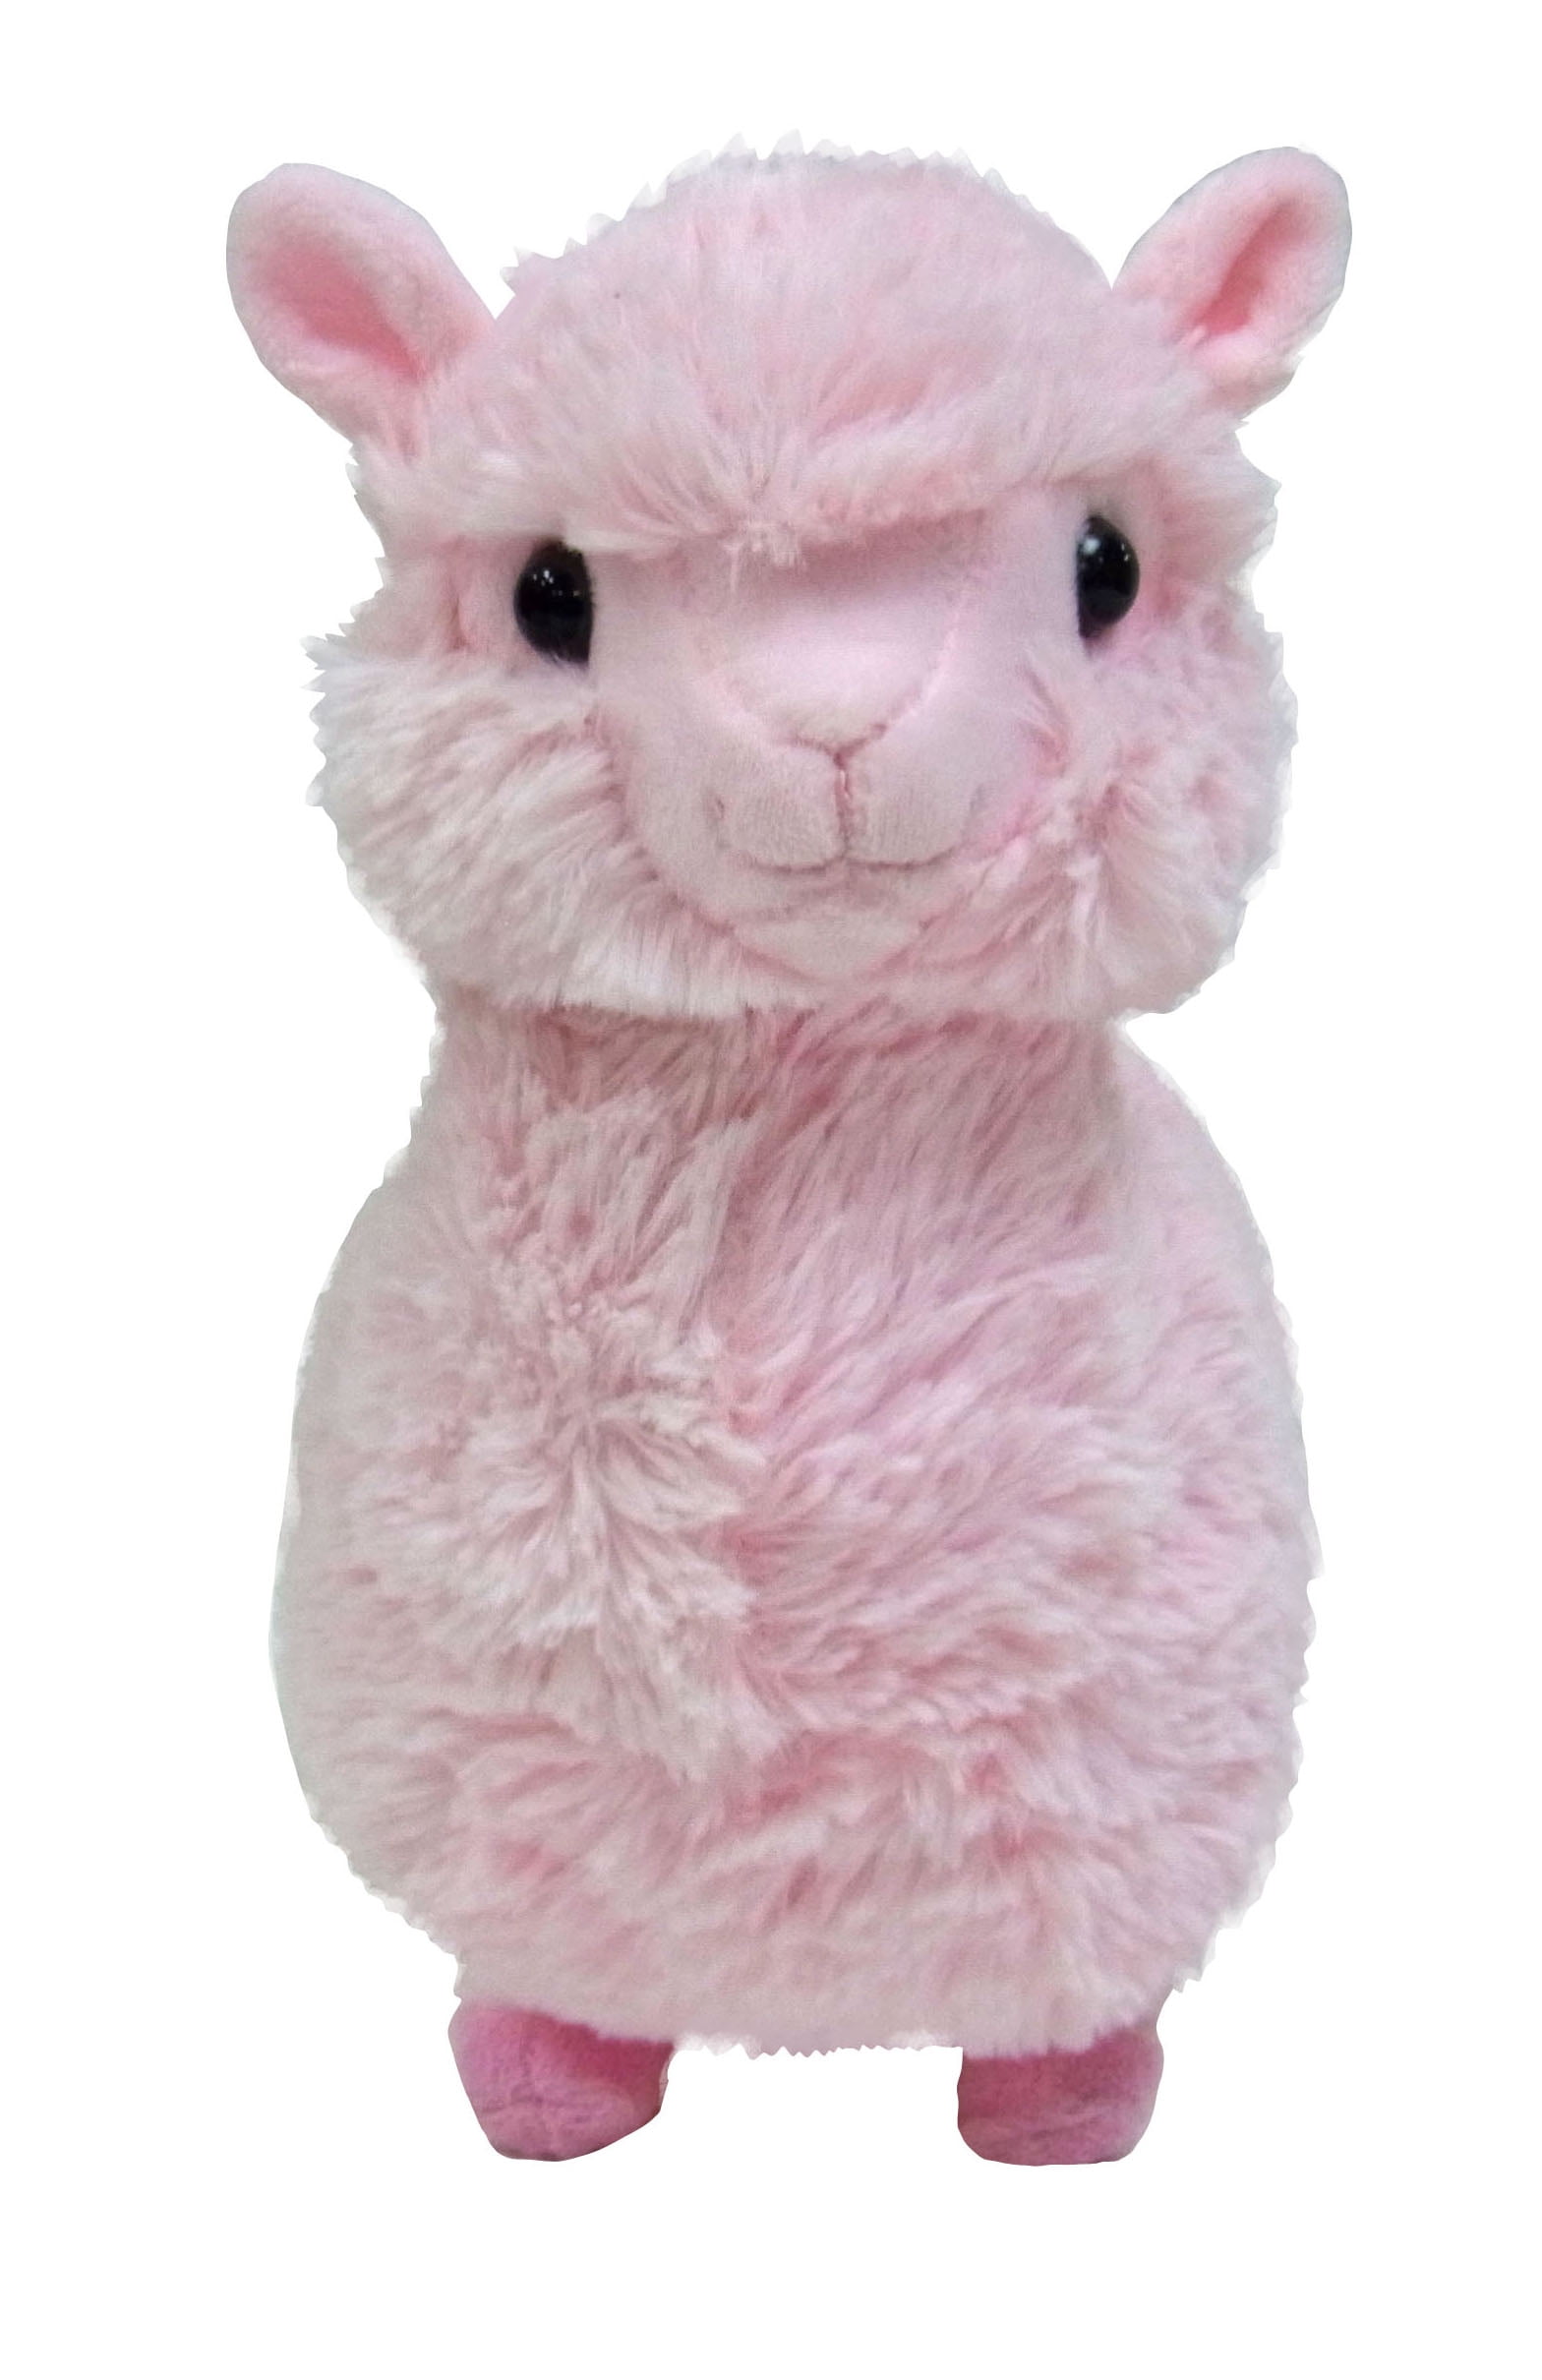 12" plush pink llama  stuffed animal  Celebrate by Walmart Easter 